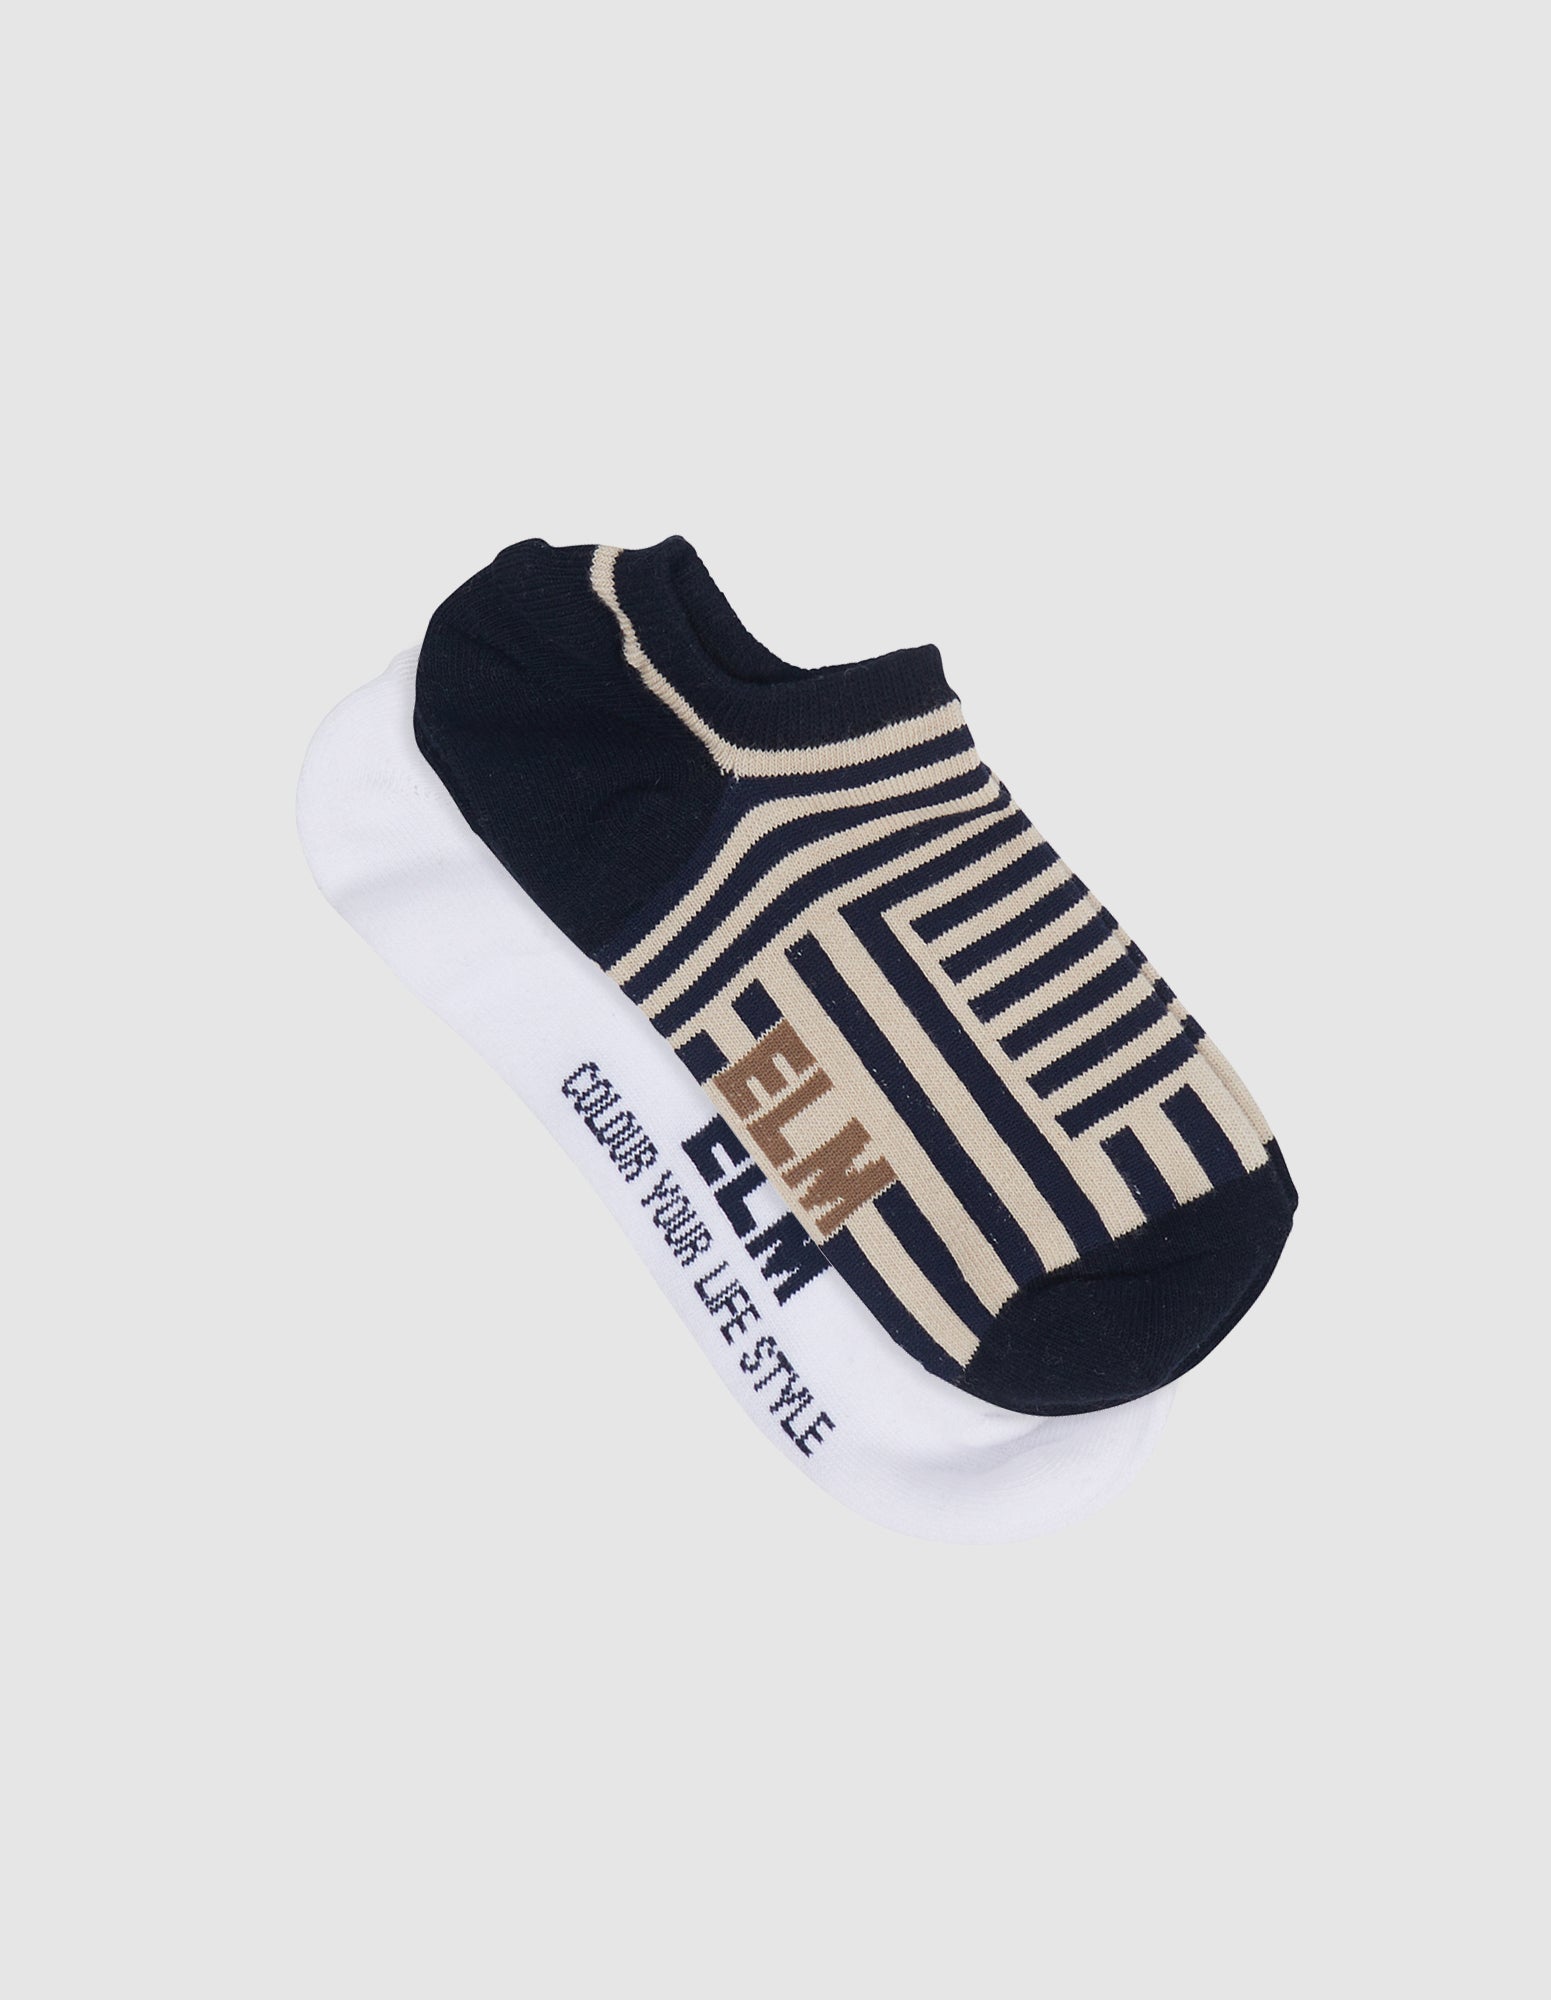 Bauhaus Ankle Sock 2 Pack